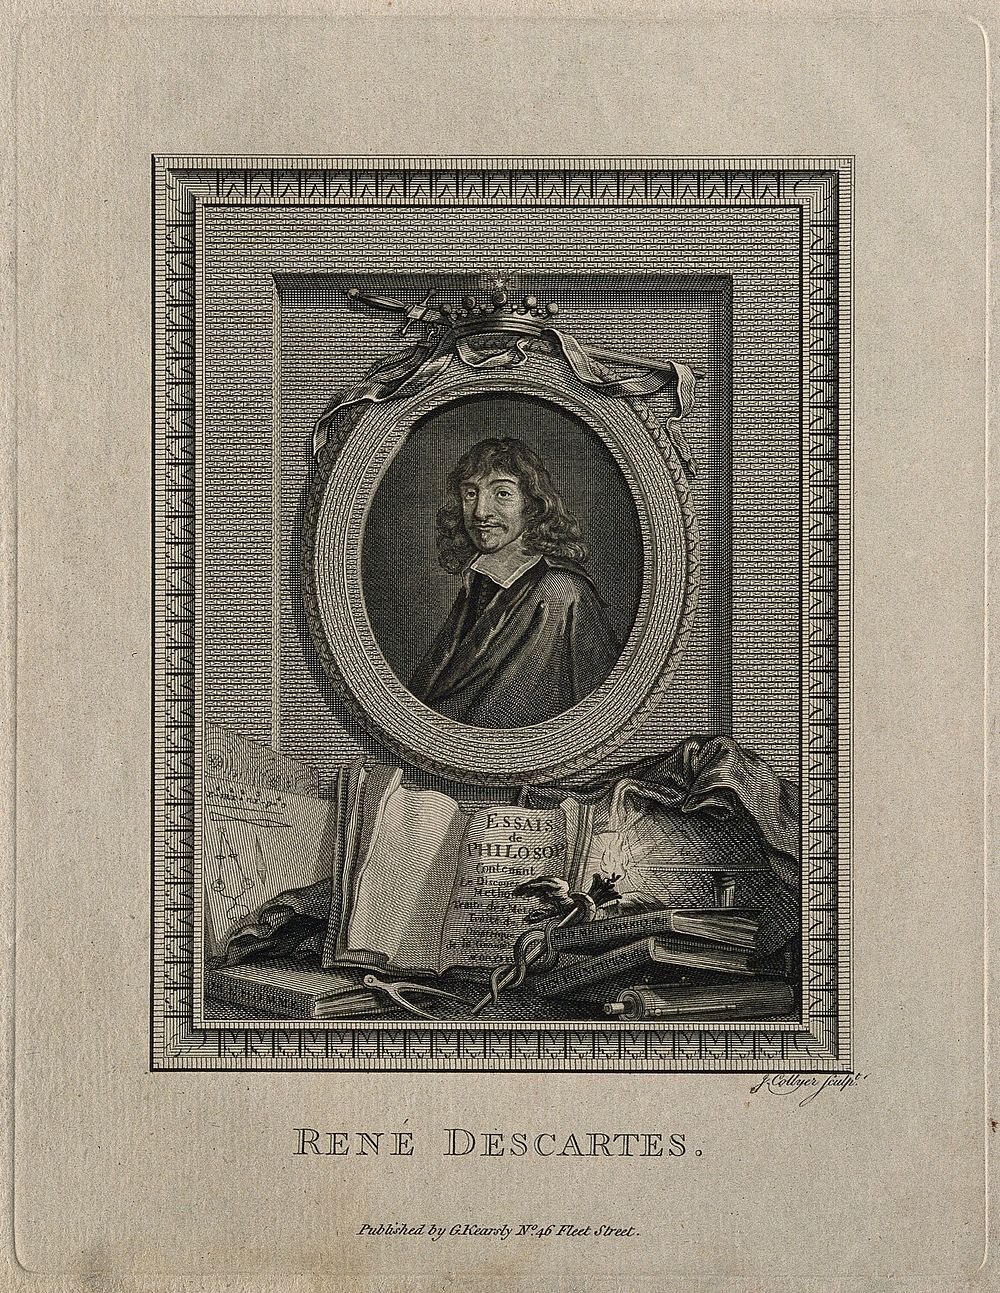 René Descartes. Line engraving by J. Collyer after F. Hals, 1649.